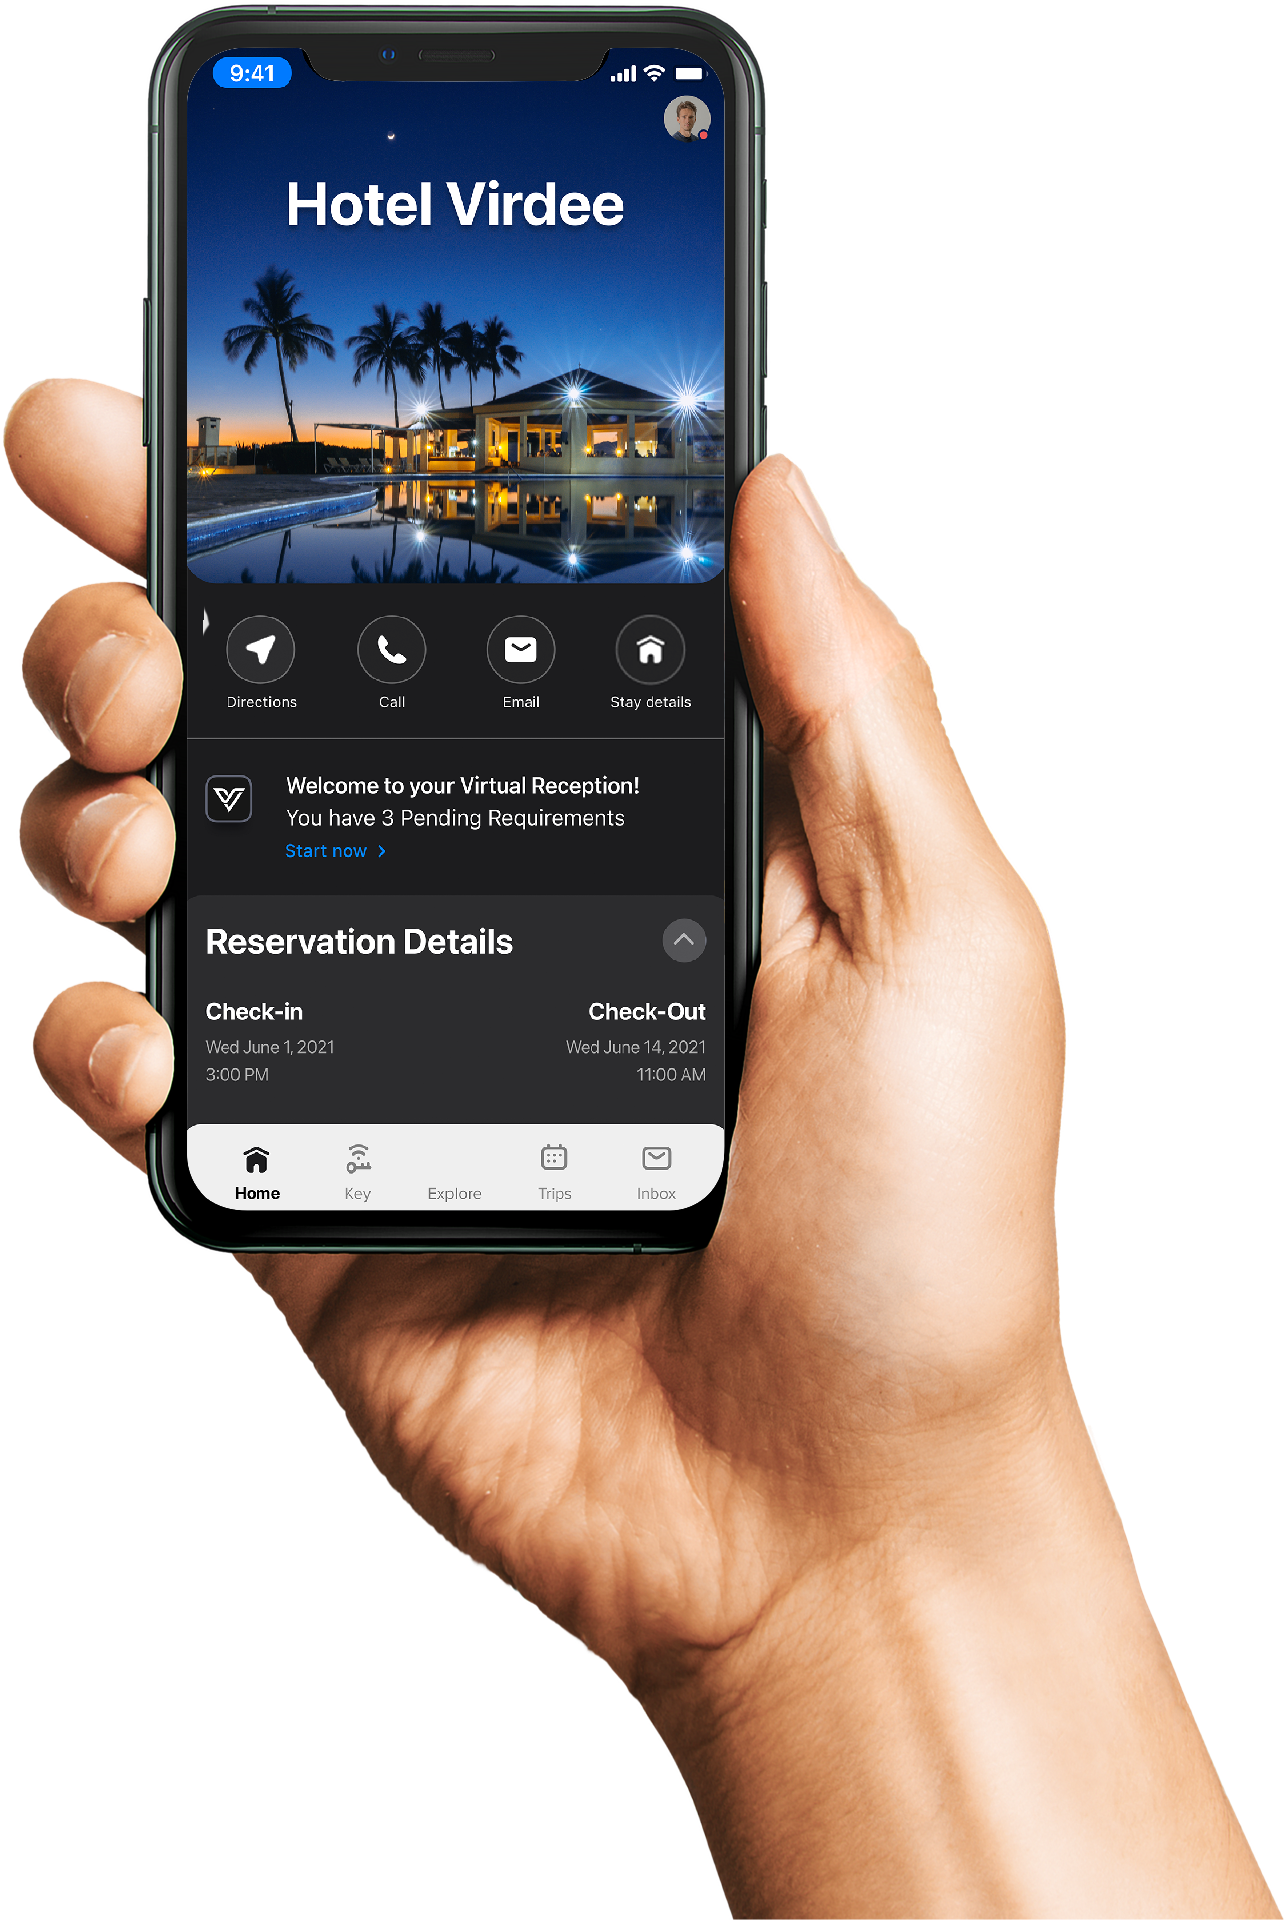 Virdde App - Phone in hand - main screen - hospitality